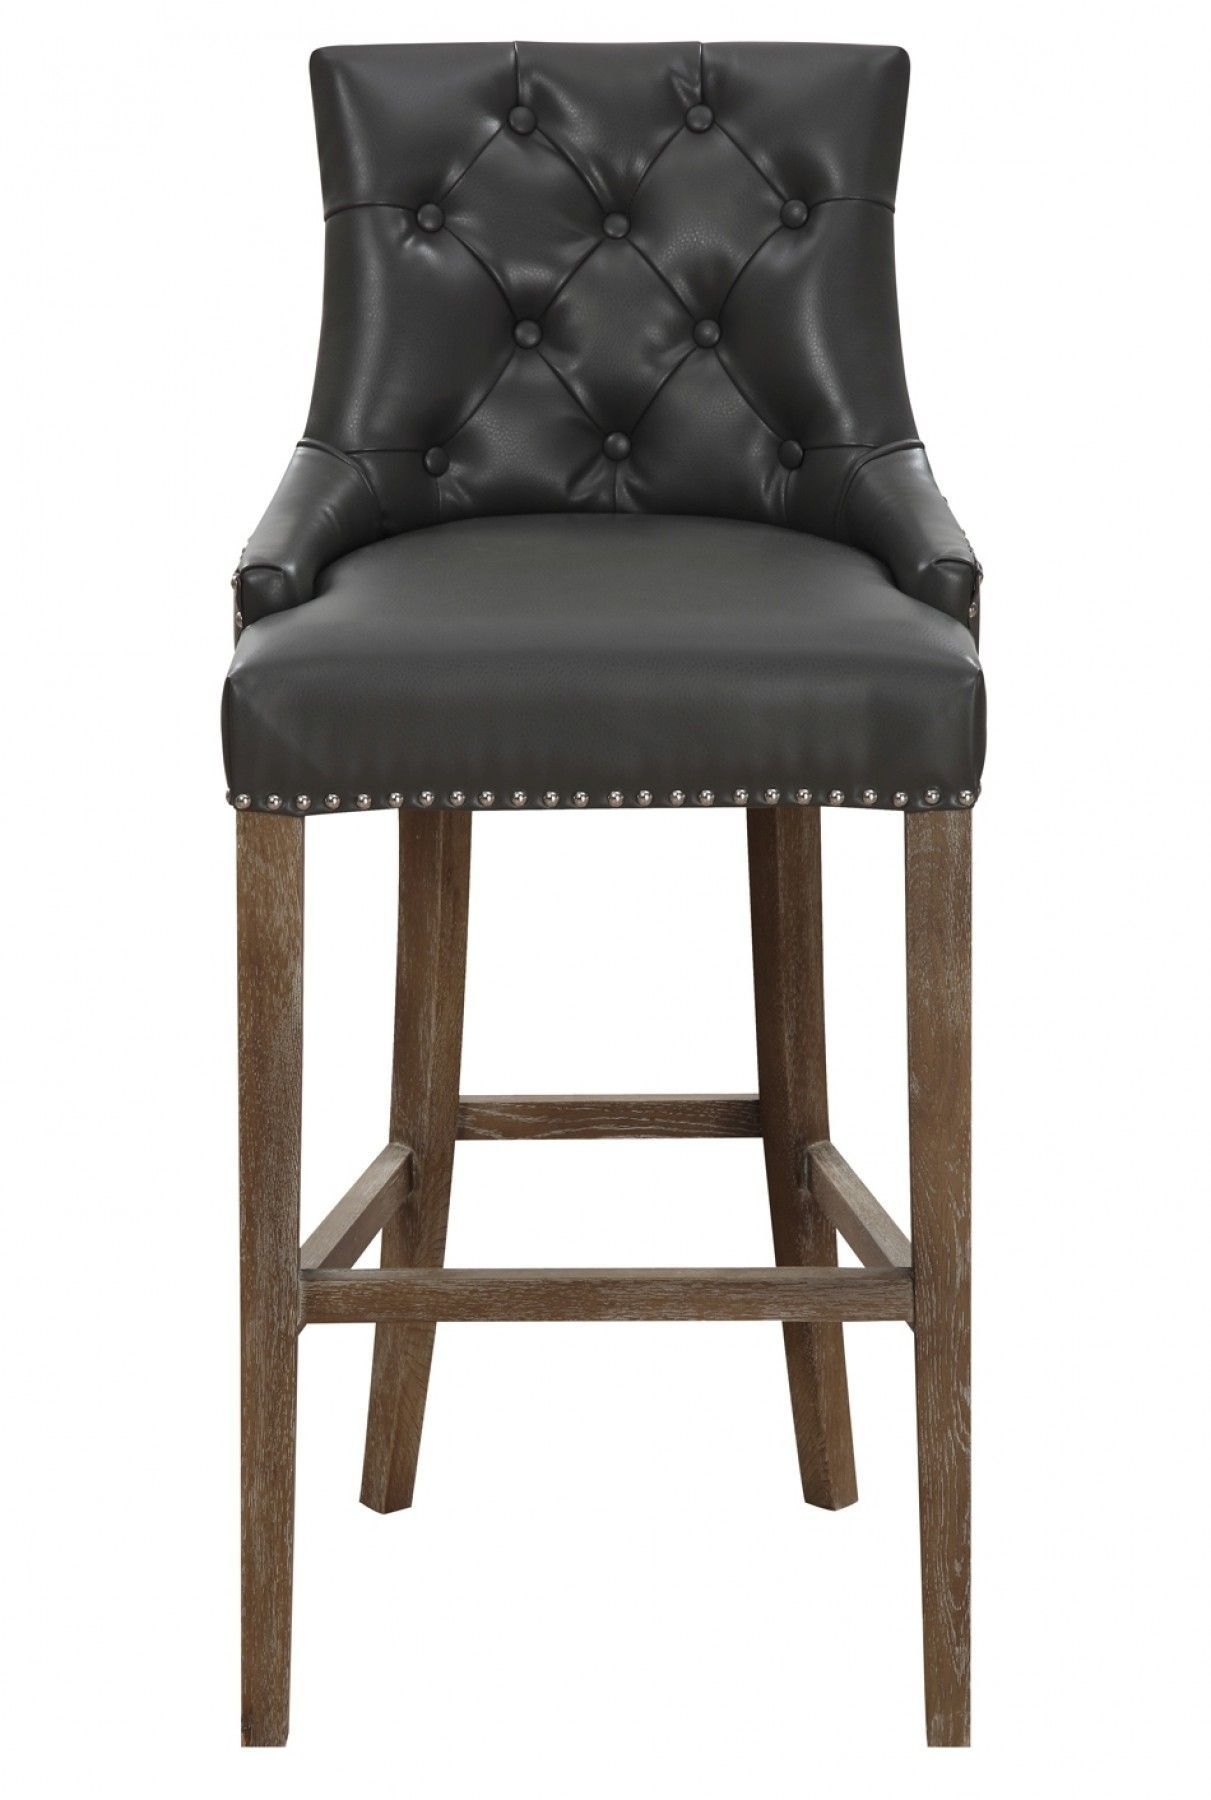 Leather top grain bar stools